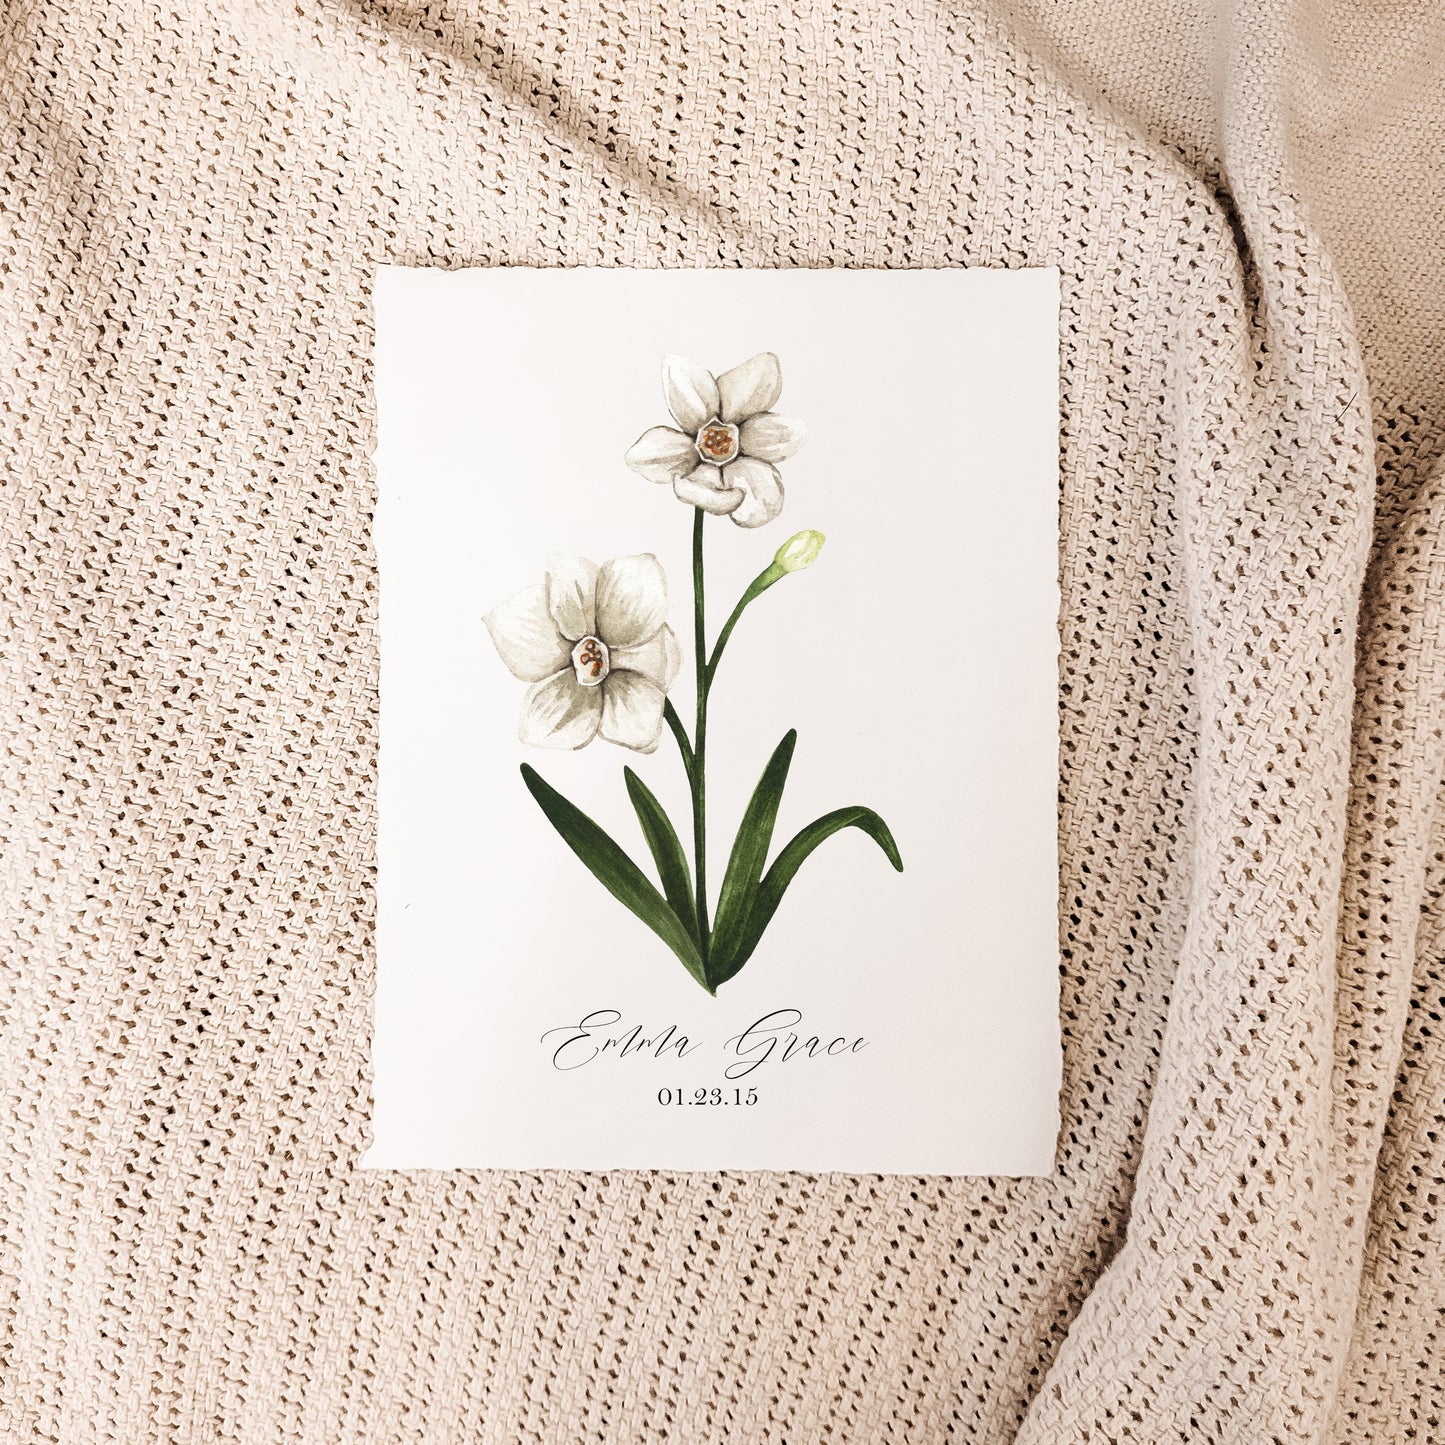 December - Paperwhite Narcissus